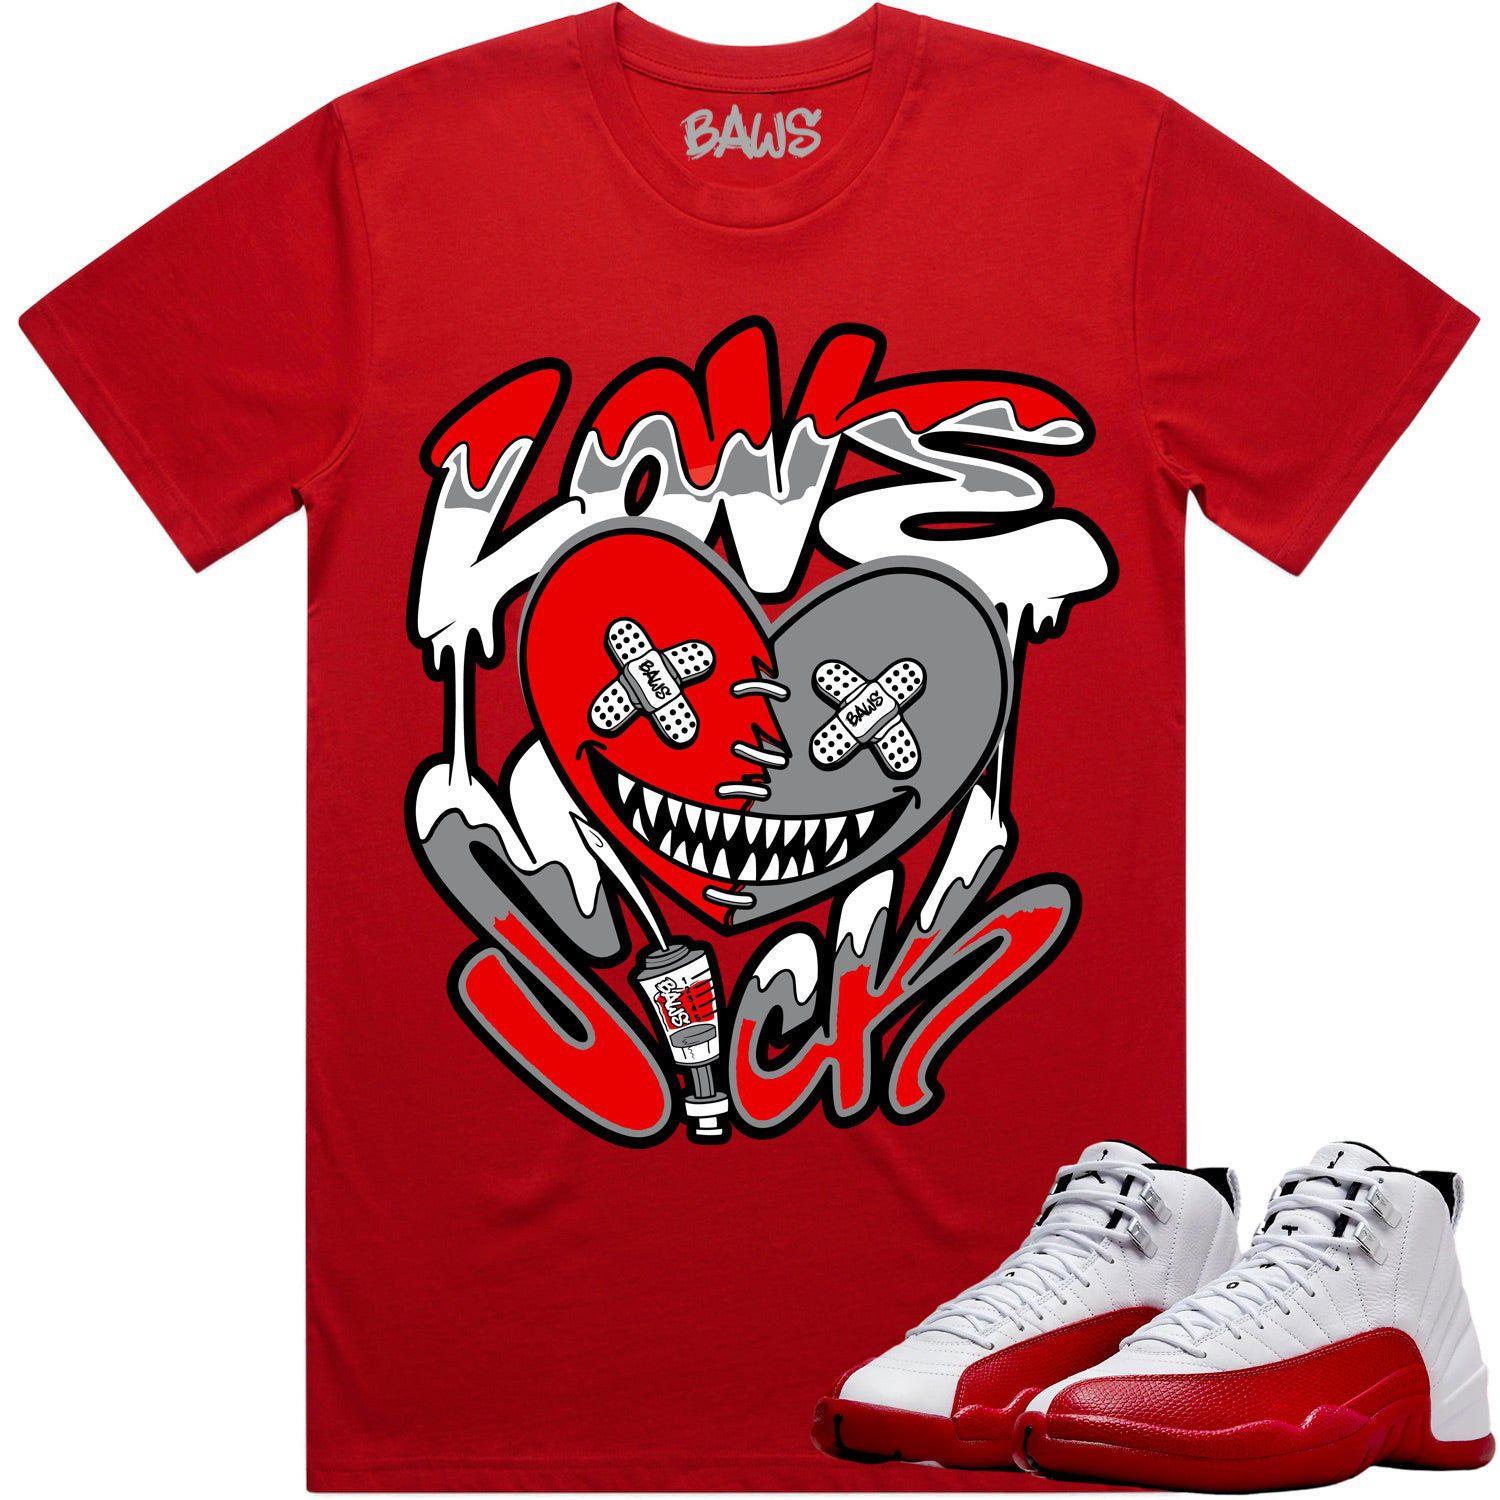 Cherry 12s Shirt - Jordan Retro 12 Cherry Shirts - Love Sick Baws